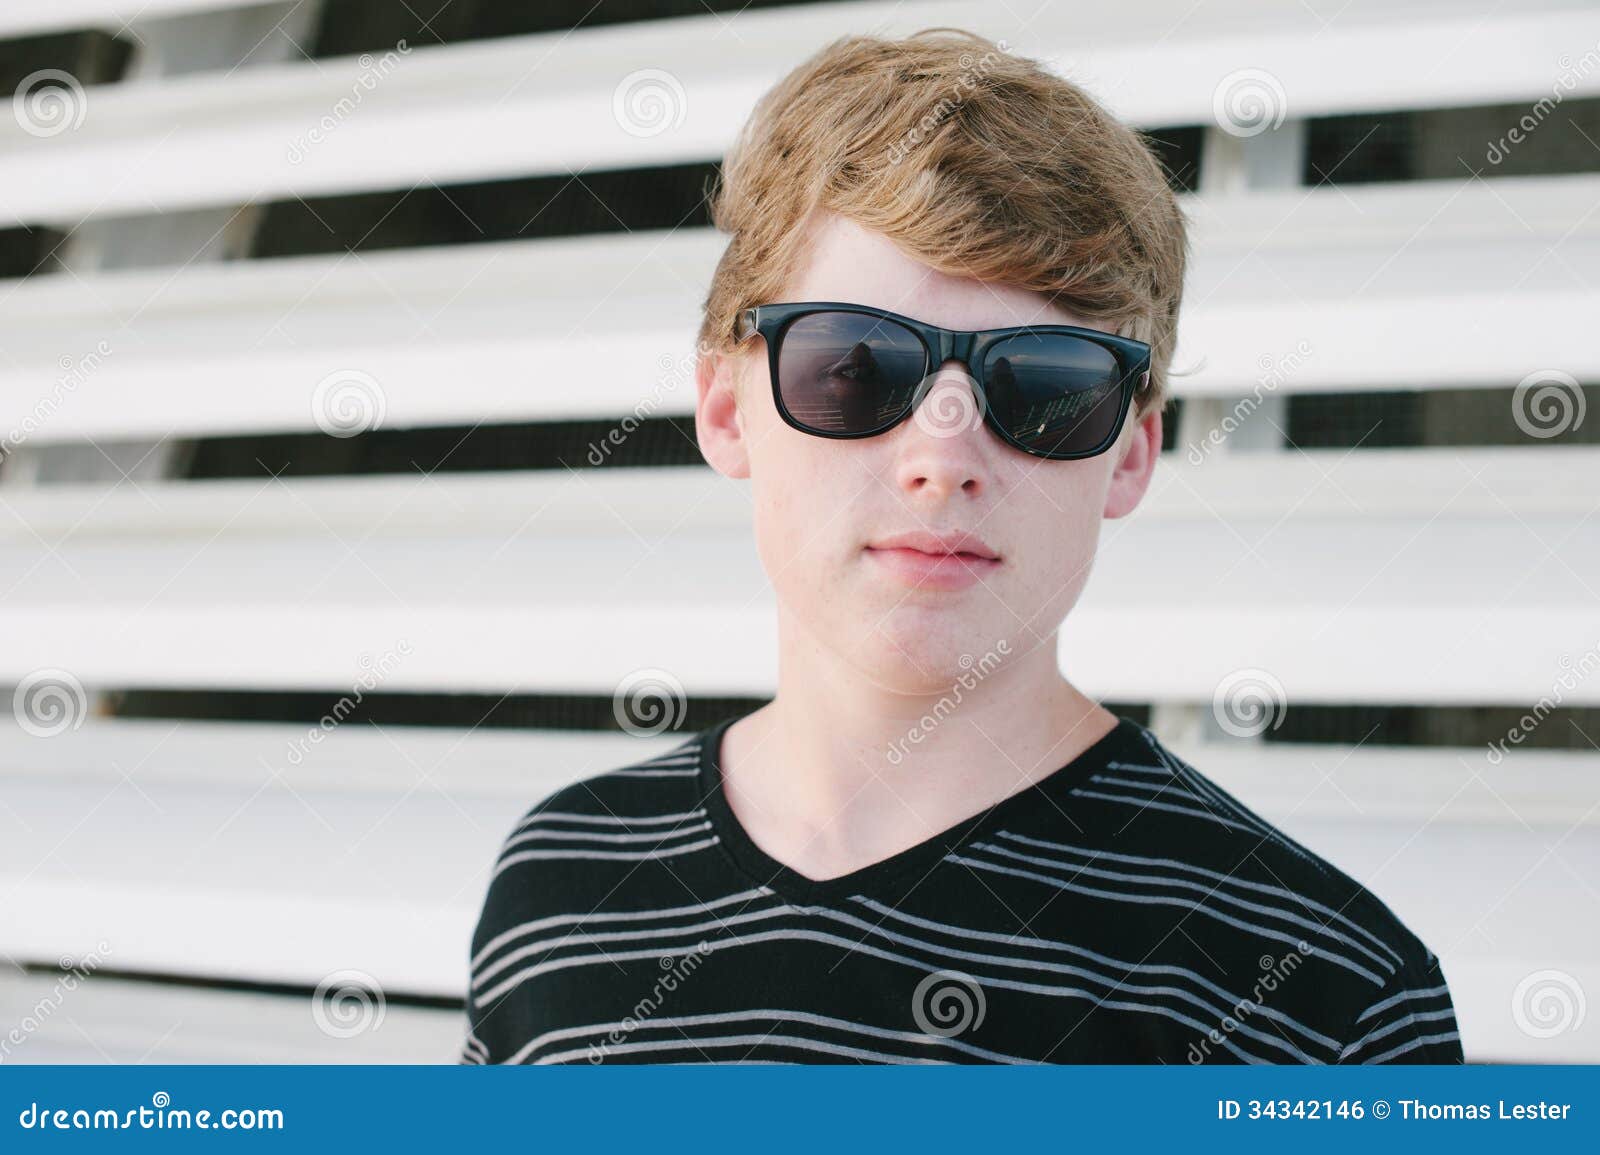 https://thumbs.dreamstime.com/z/tenn-boy-striped-shirt-sunglasses-blond-teen-stripped-infront-white-horizontal-slats-34342146.jpg